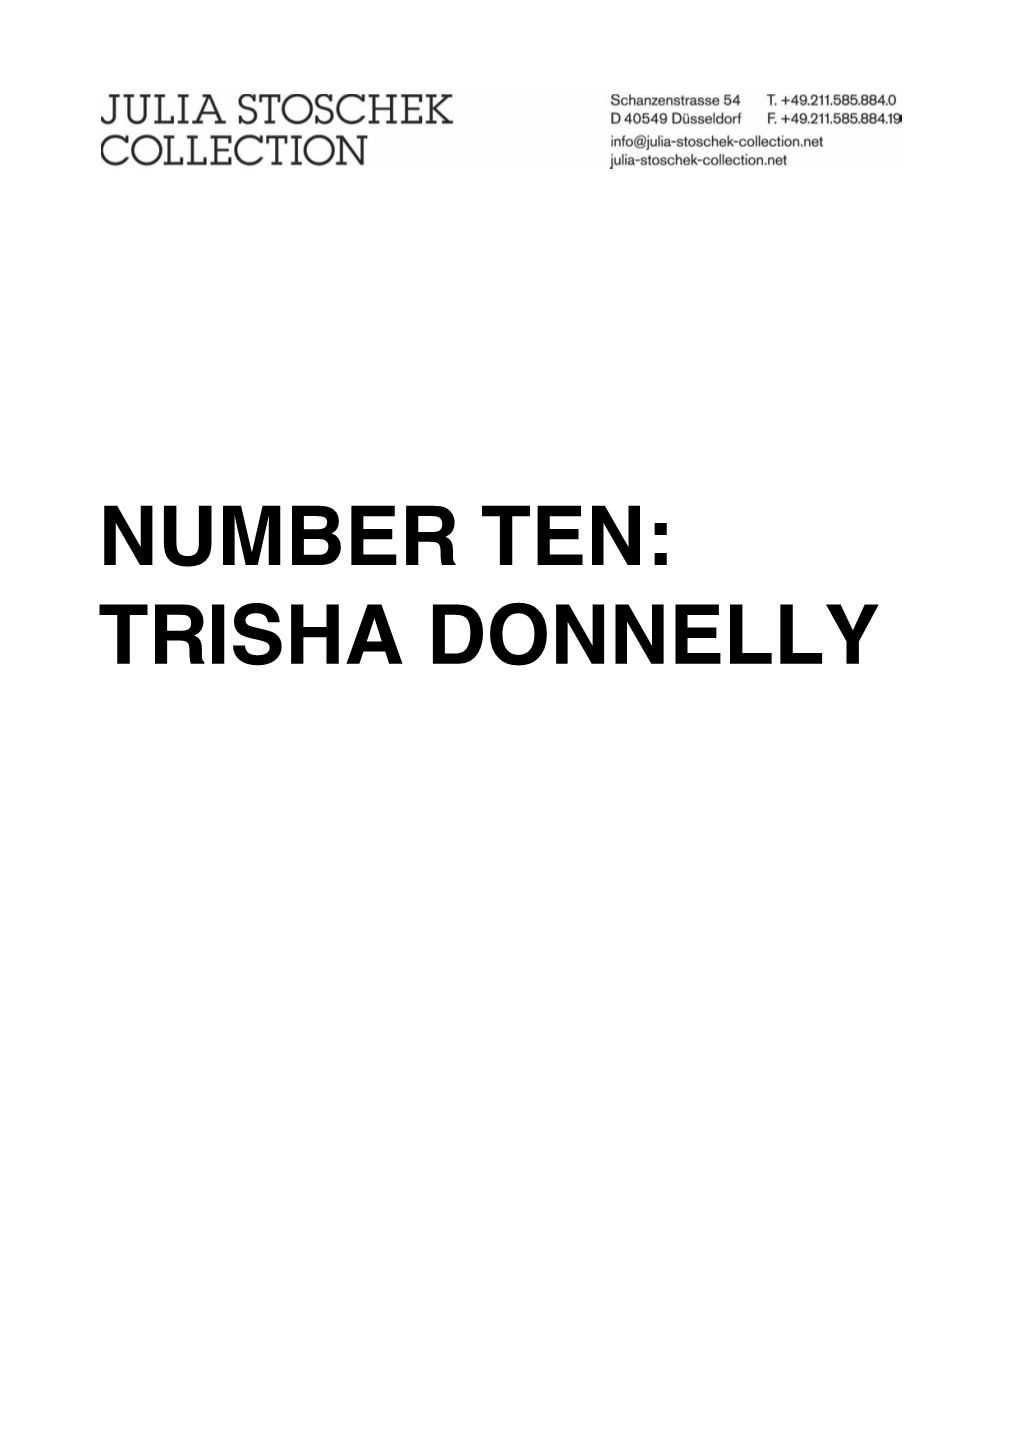 Number Ten: Trisha Donnelly